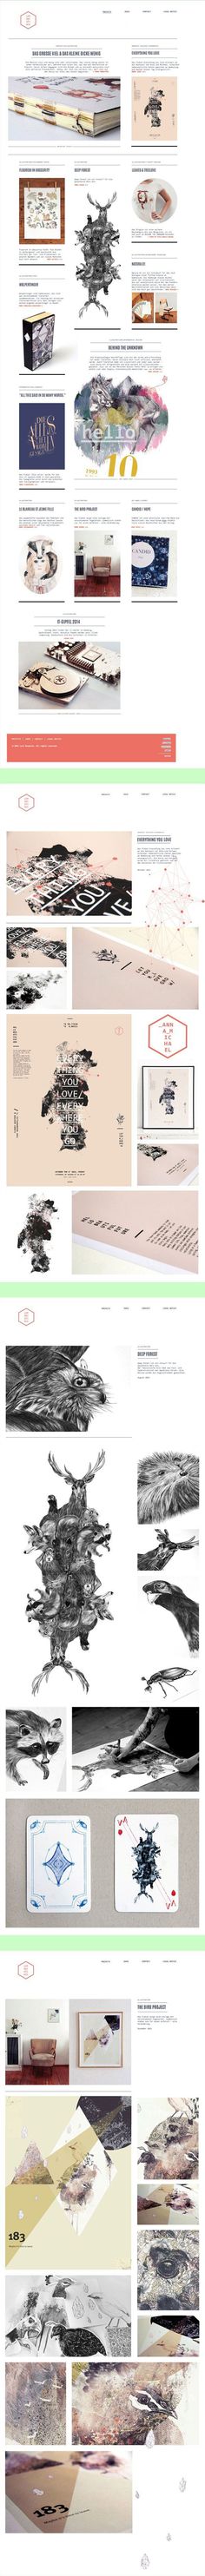 This is my new website www.larabispinck.com #homepage #design #graphic #website #illustration #webdesign #personal #wwwlarabispinckcom